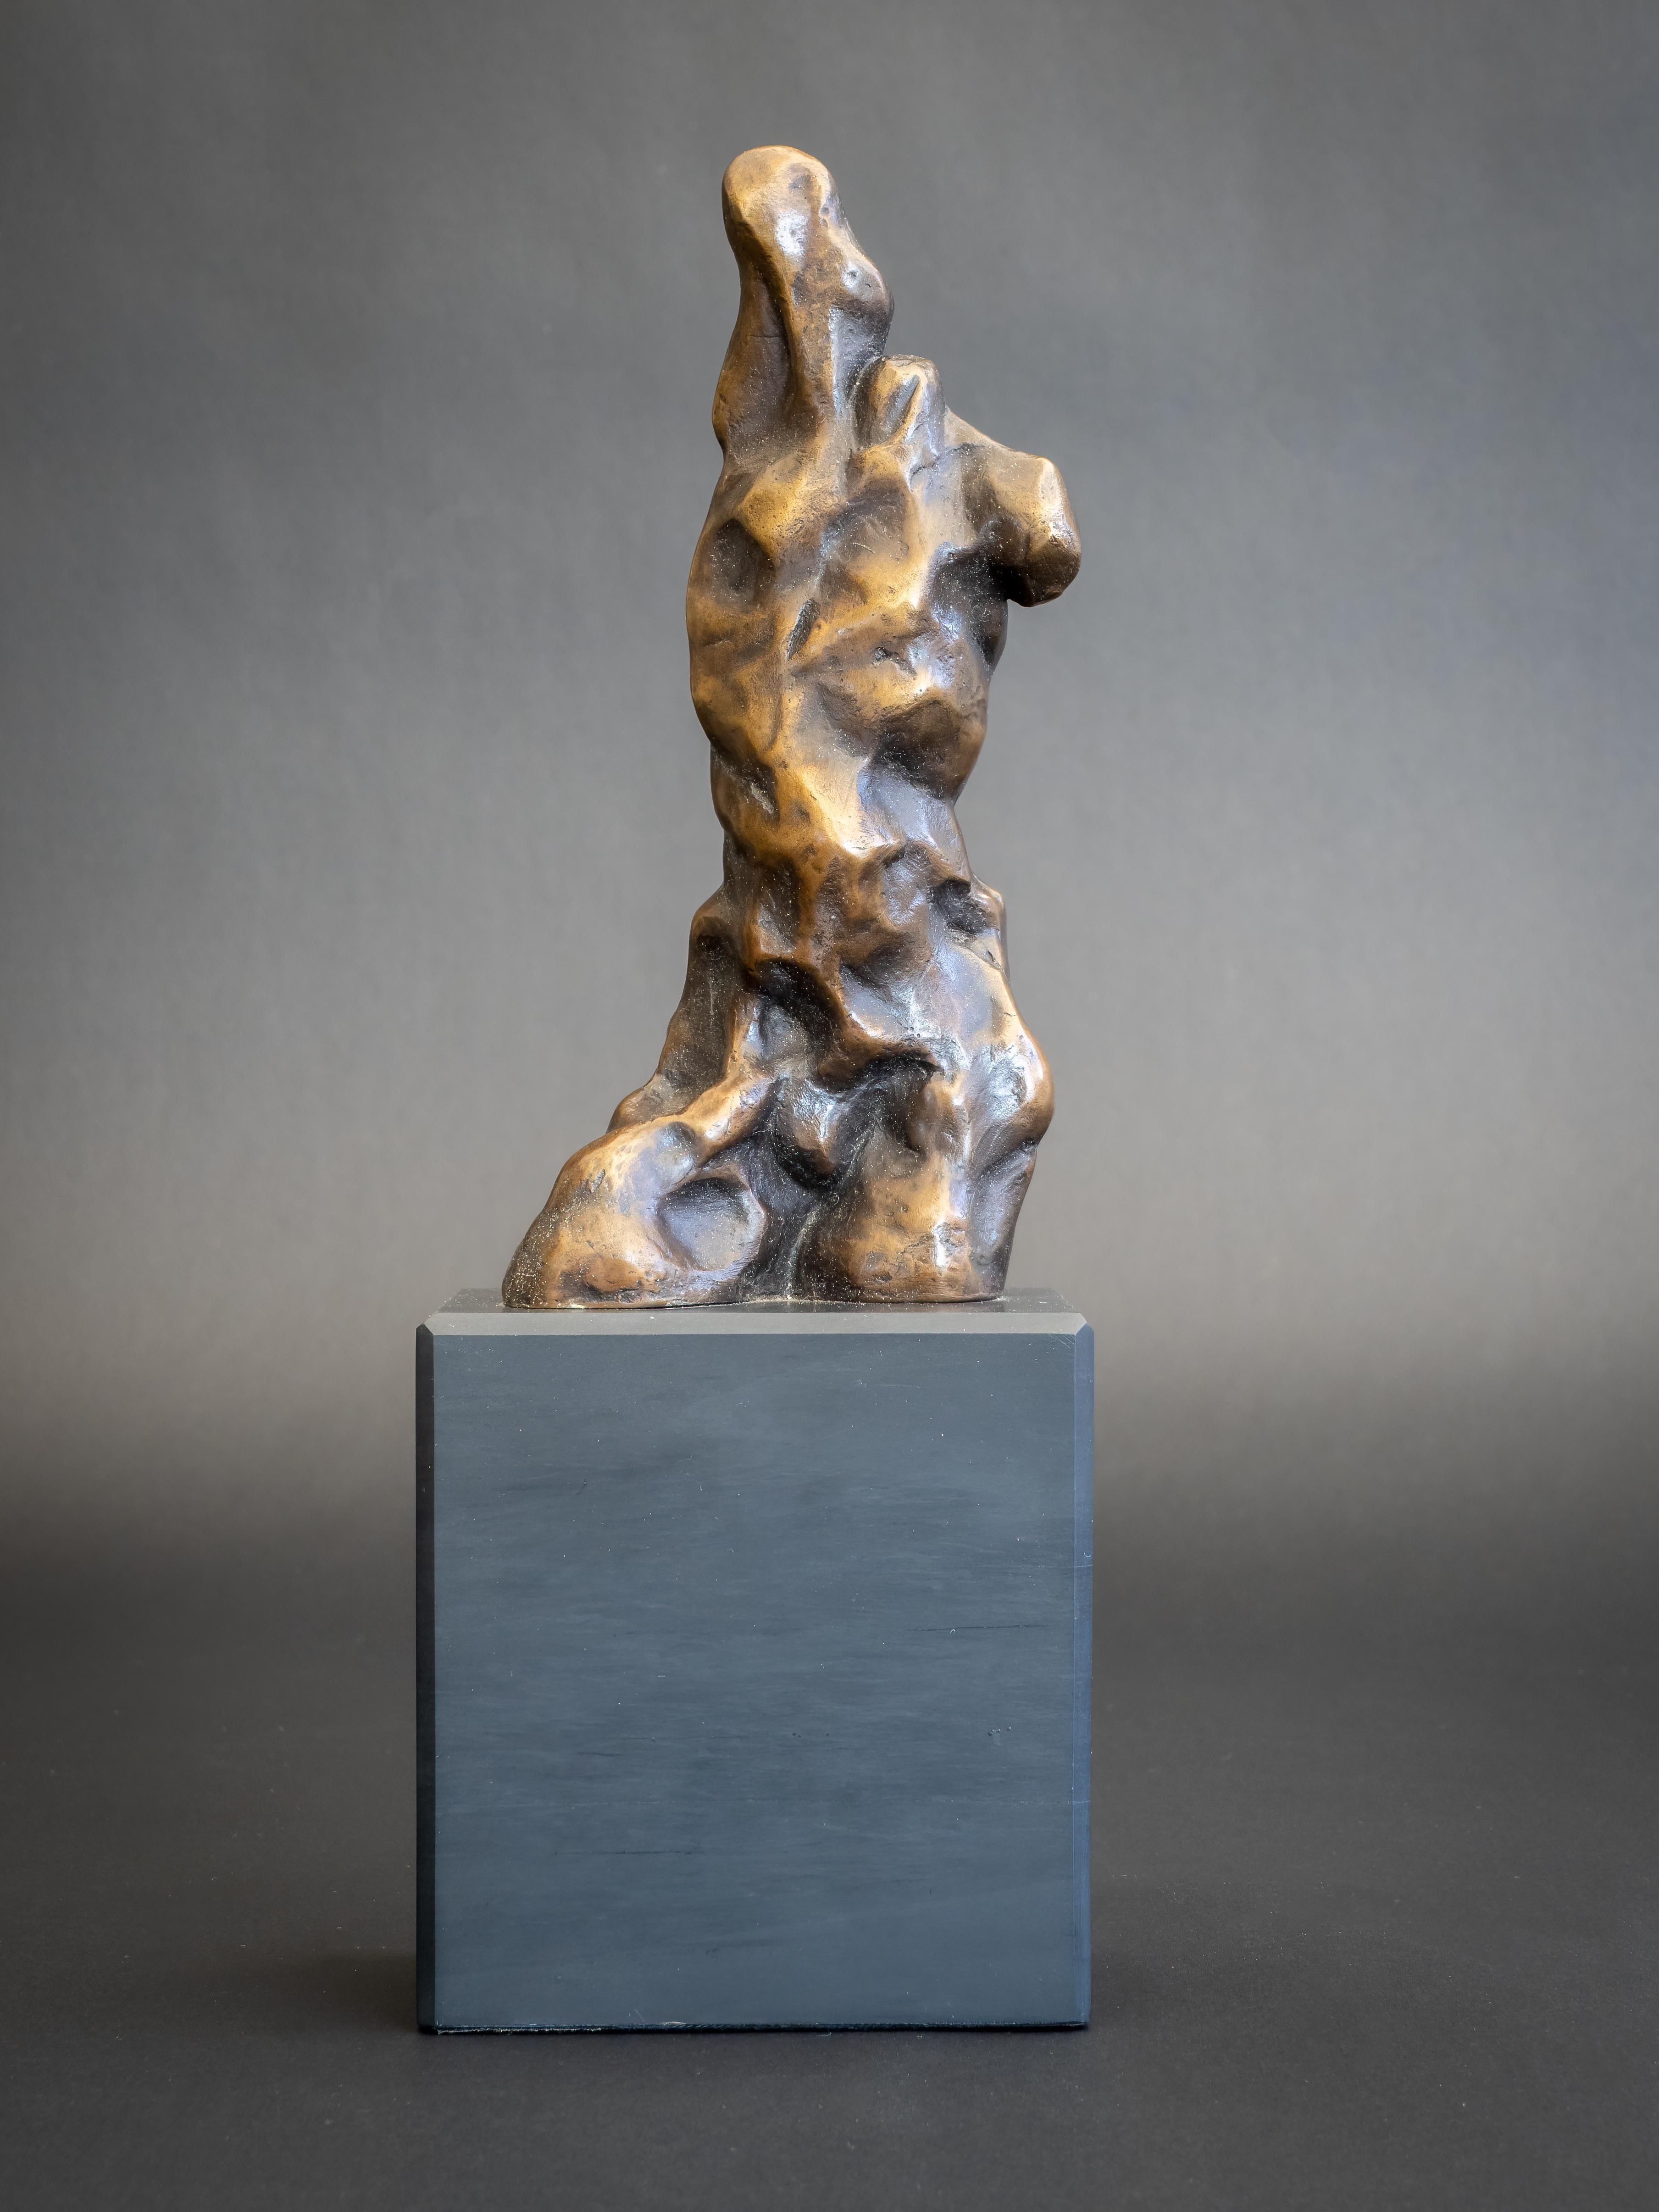 Adam II-original figurative bronze sculptures-artworks for sale-contemporary Art - Sculpture by Nicola Godden